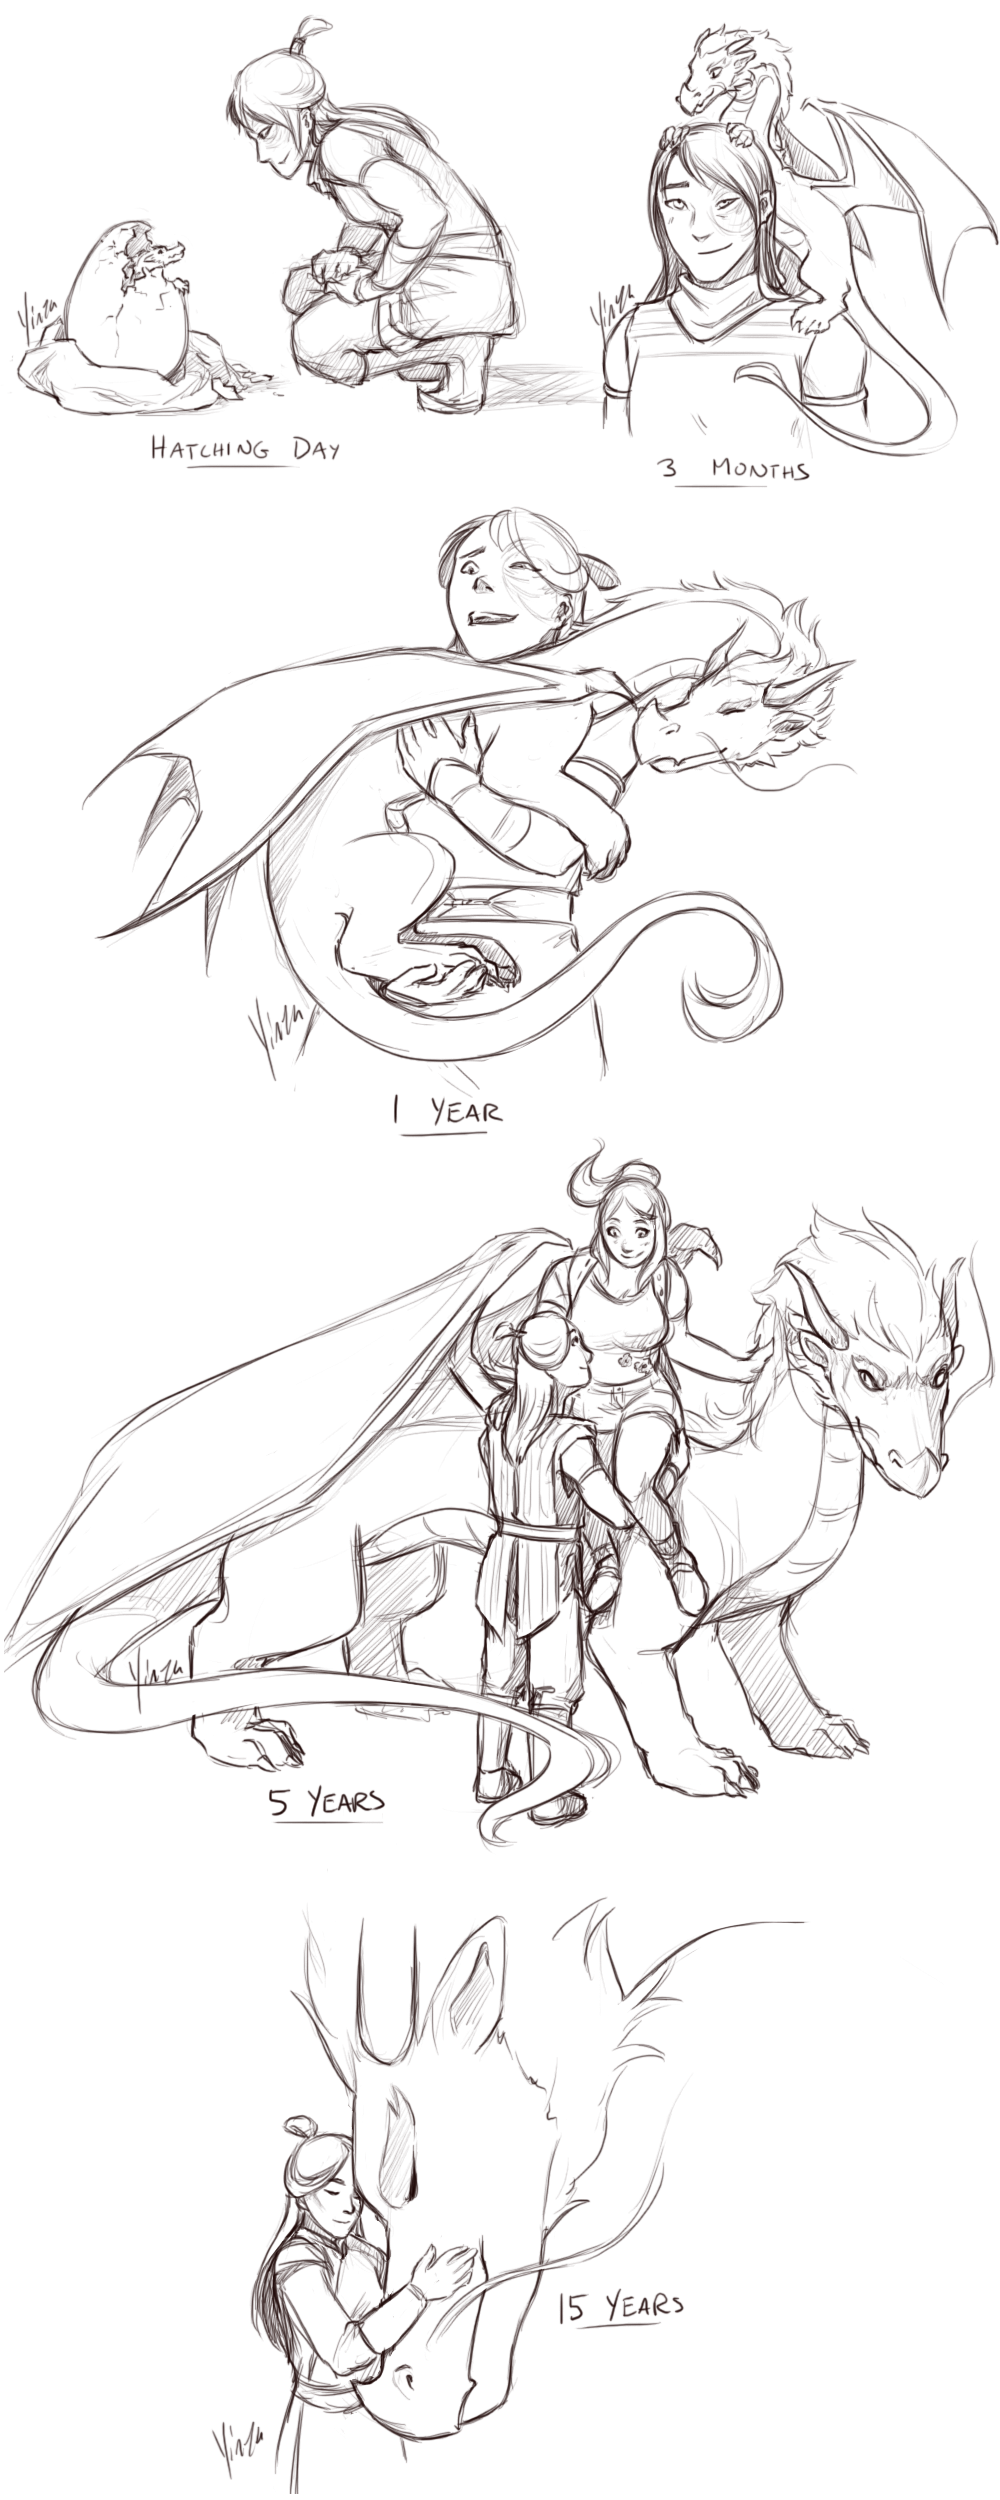 Princess Zuko and her dragon through the years.